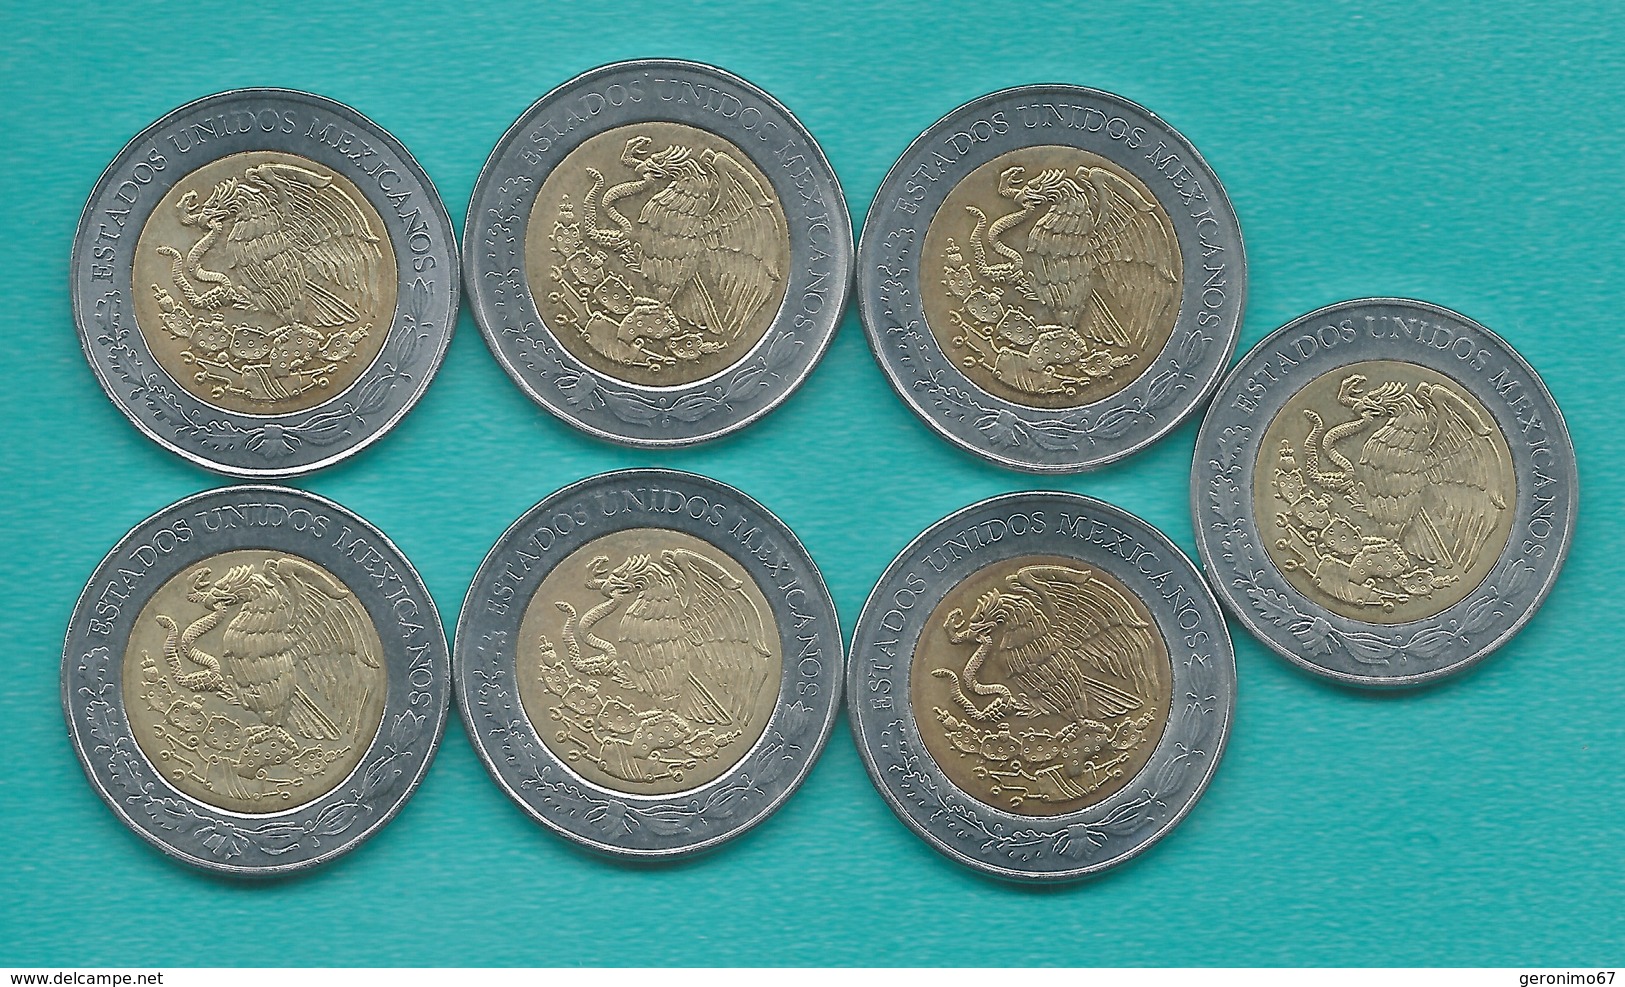 Mexico - Bicentenary Of Independence 5 Pesos - 2008 - Set X 13 (KMs 894-906) - Rayón, Obregón, Bustamante, Vasconcelos, - Mexico